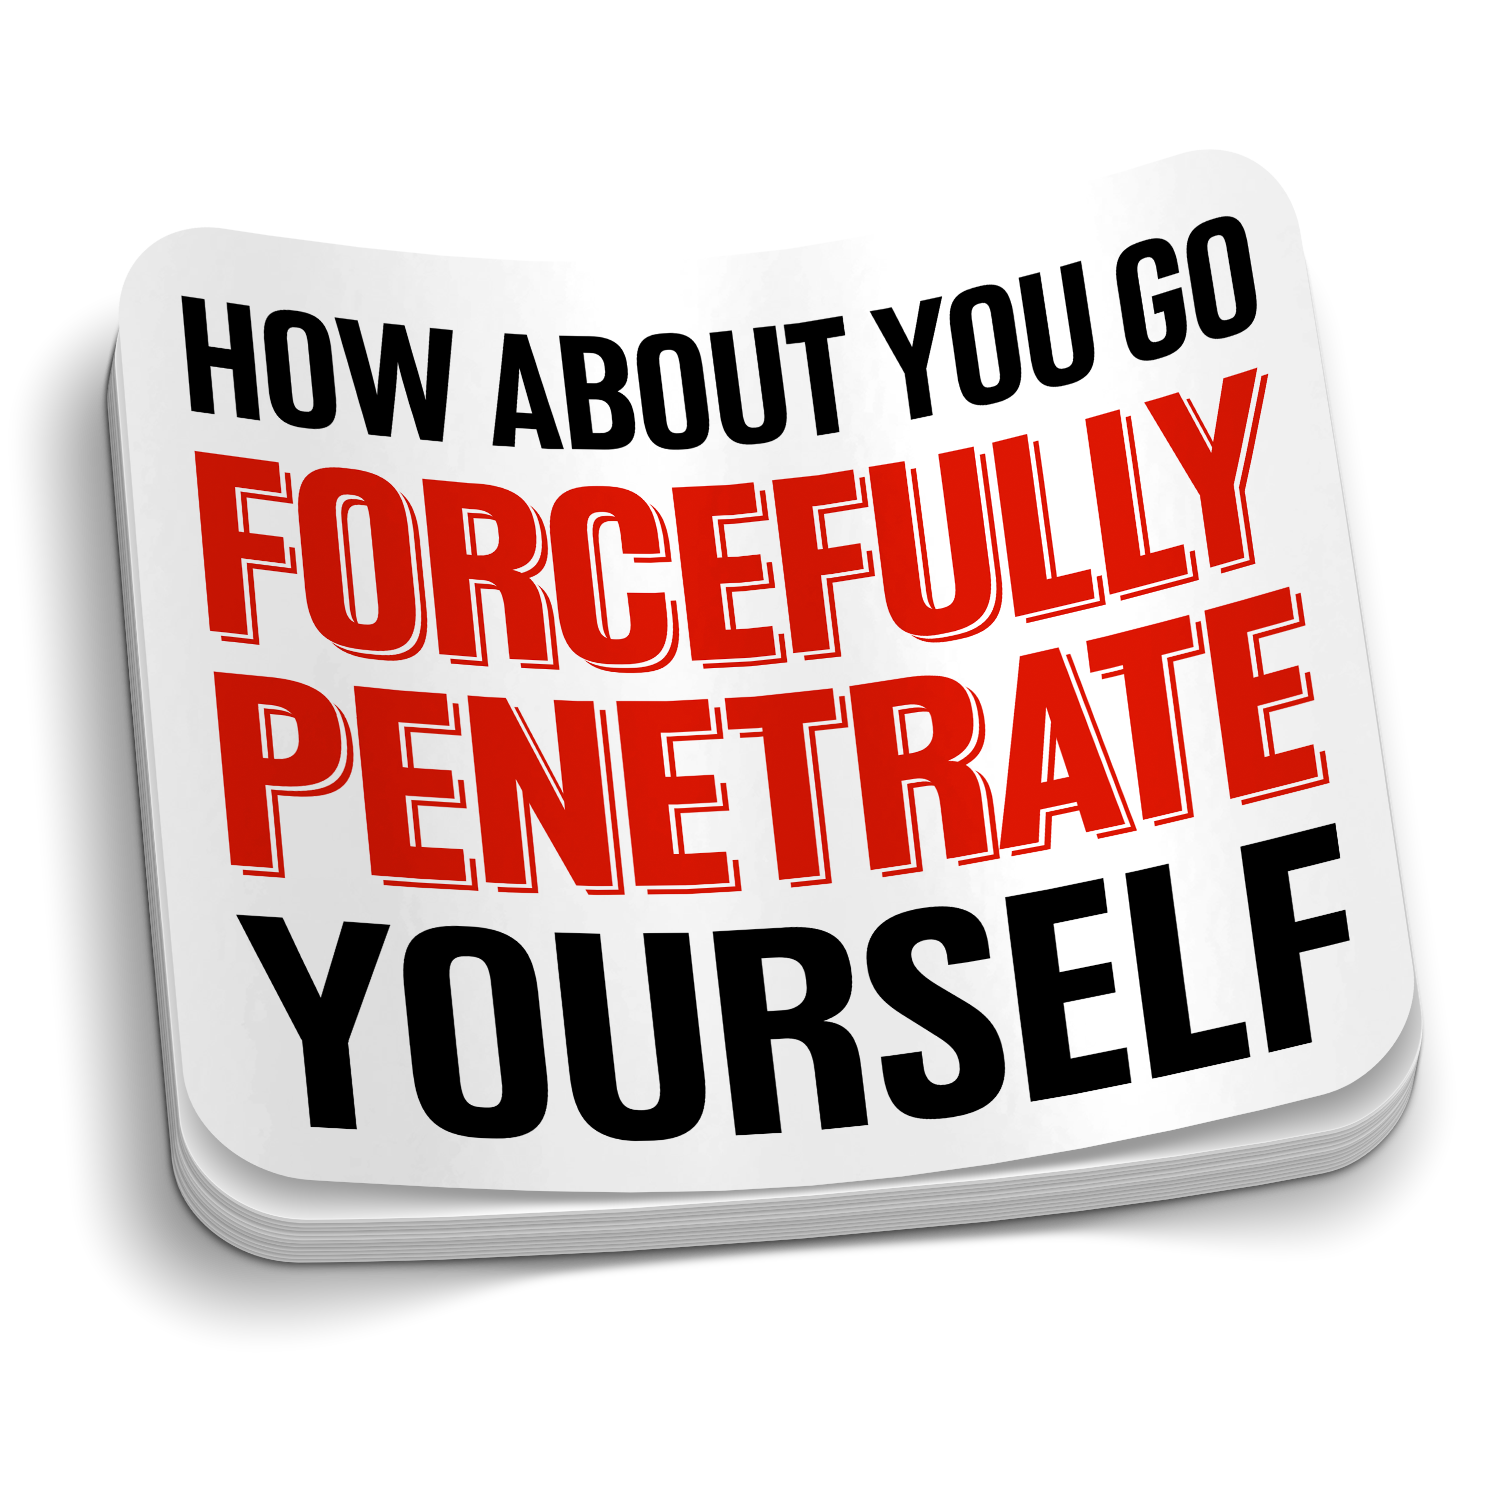 Penetrate Yourself Sticker